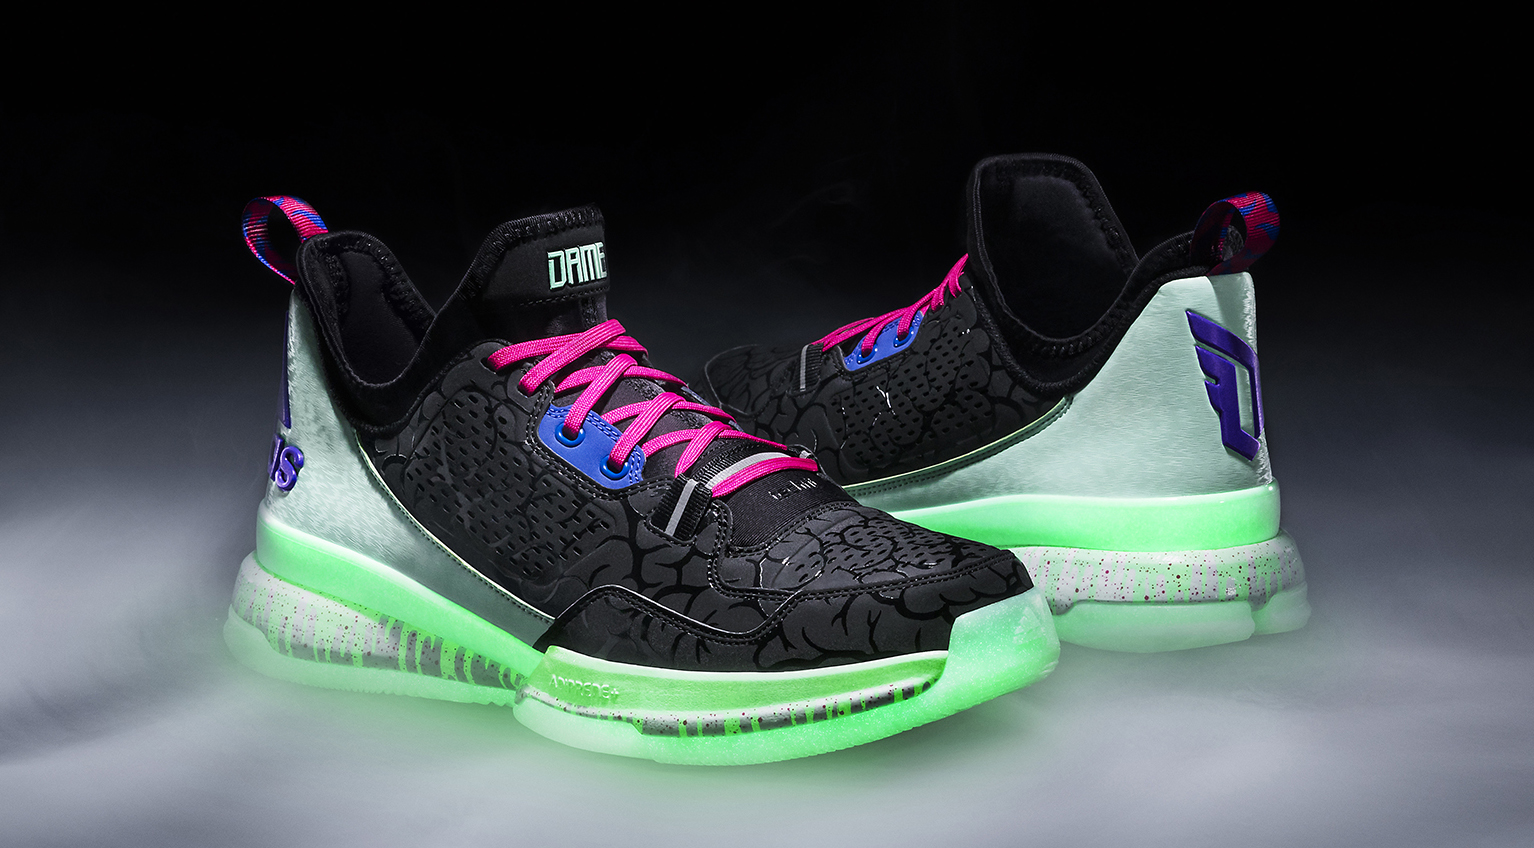 Nike Kyrie 5 Black Magic Release Details SneakerNews.com